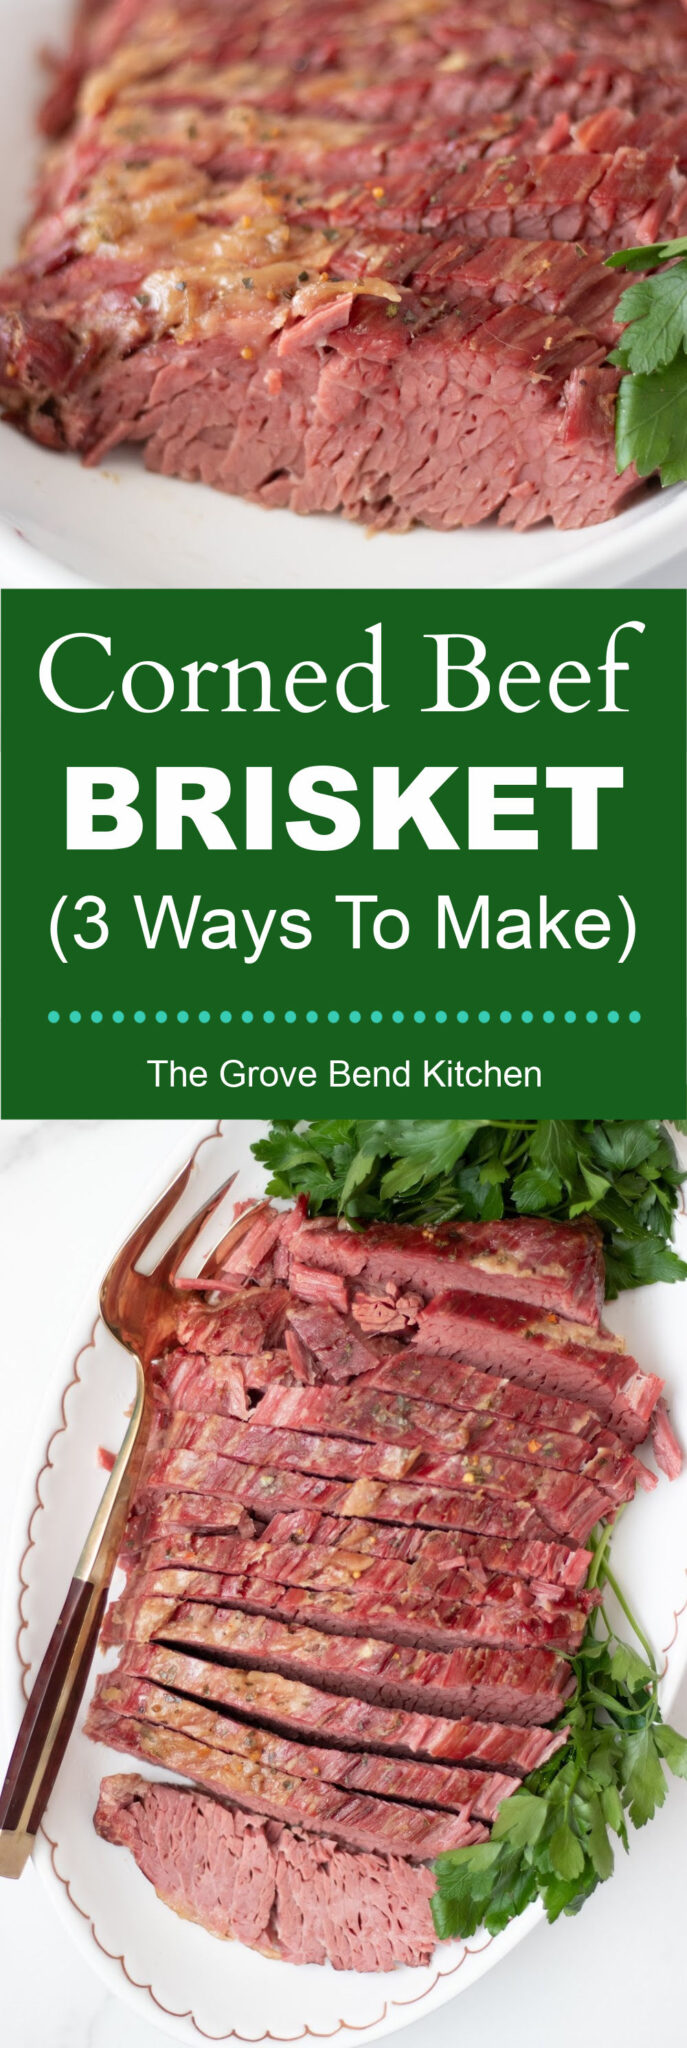 Corned Beef Brisket (3 Ways To Make) - The Grove Bend Kitchen